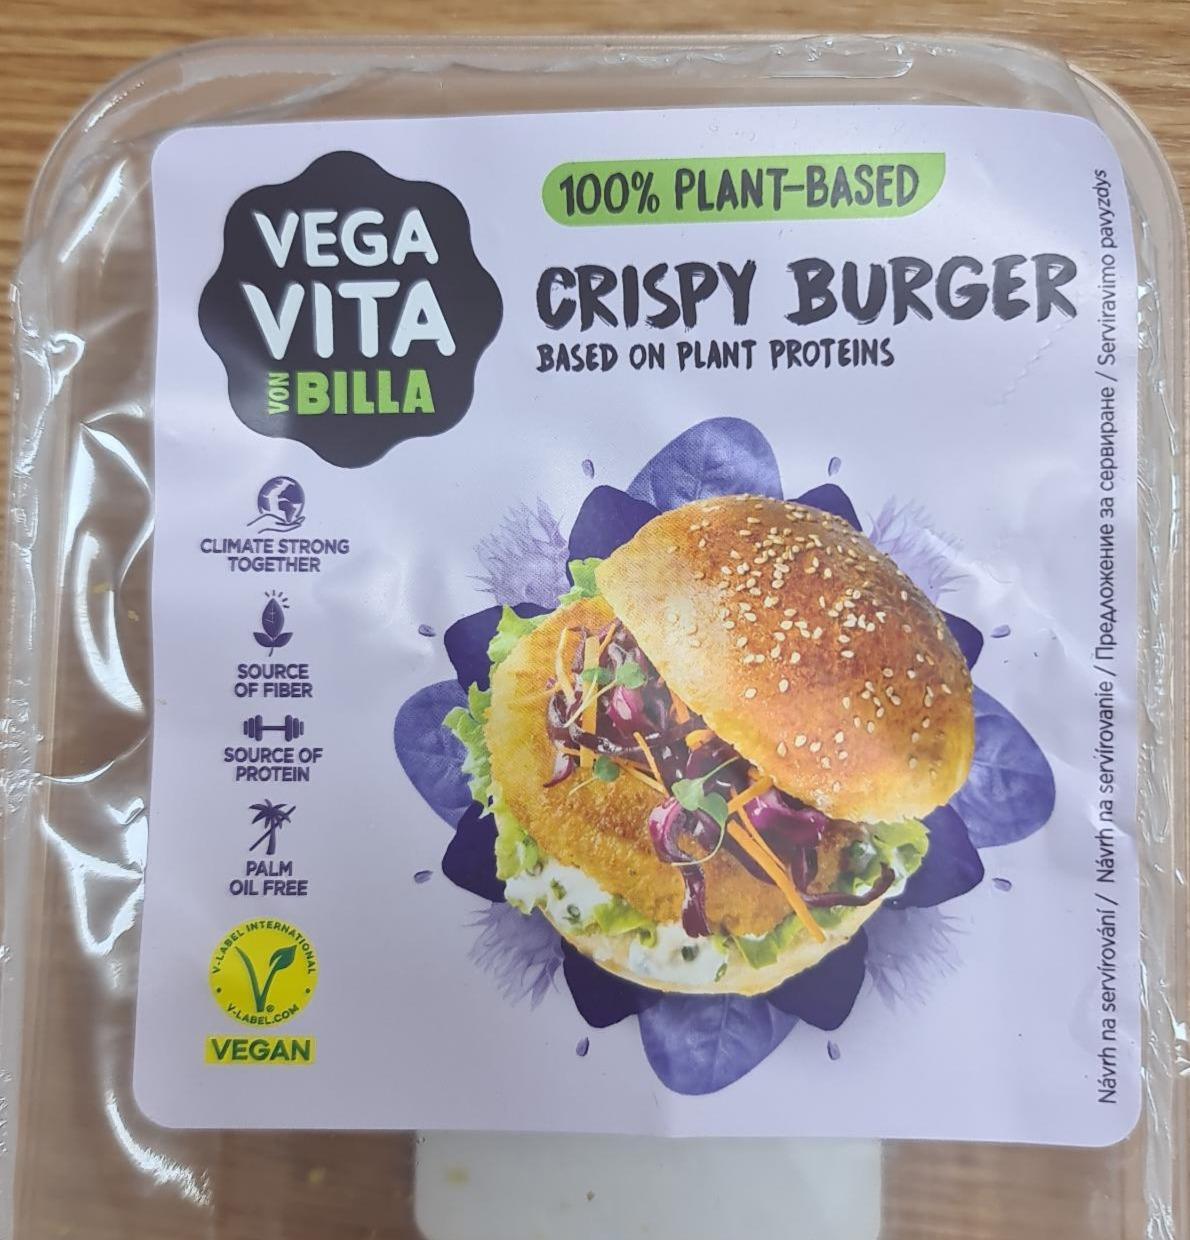 Fotografie - Crispy burger based on plant proteins Vega Vita von Billa